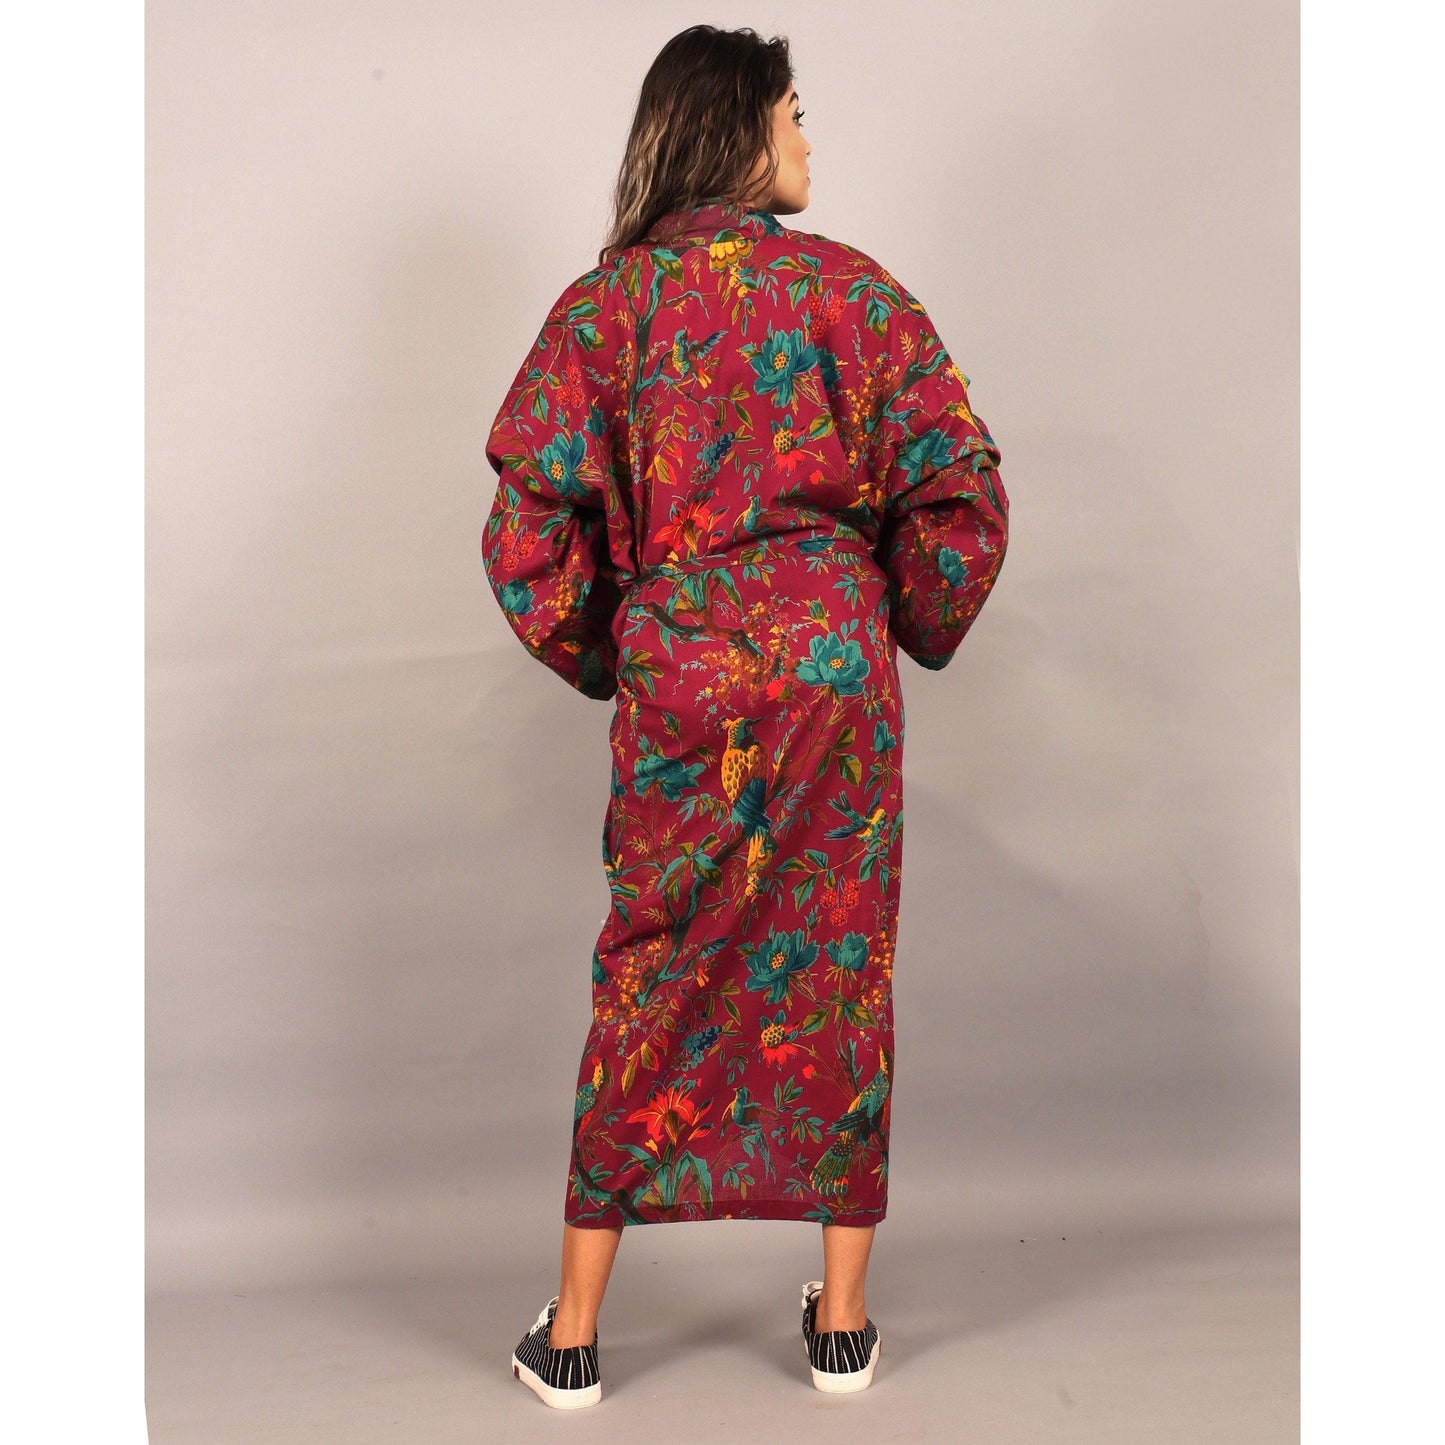 Kimono Bath Robes/ Night Suit Paradise- Maroon - The Teal Thread